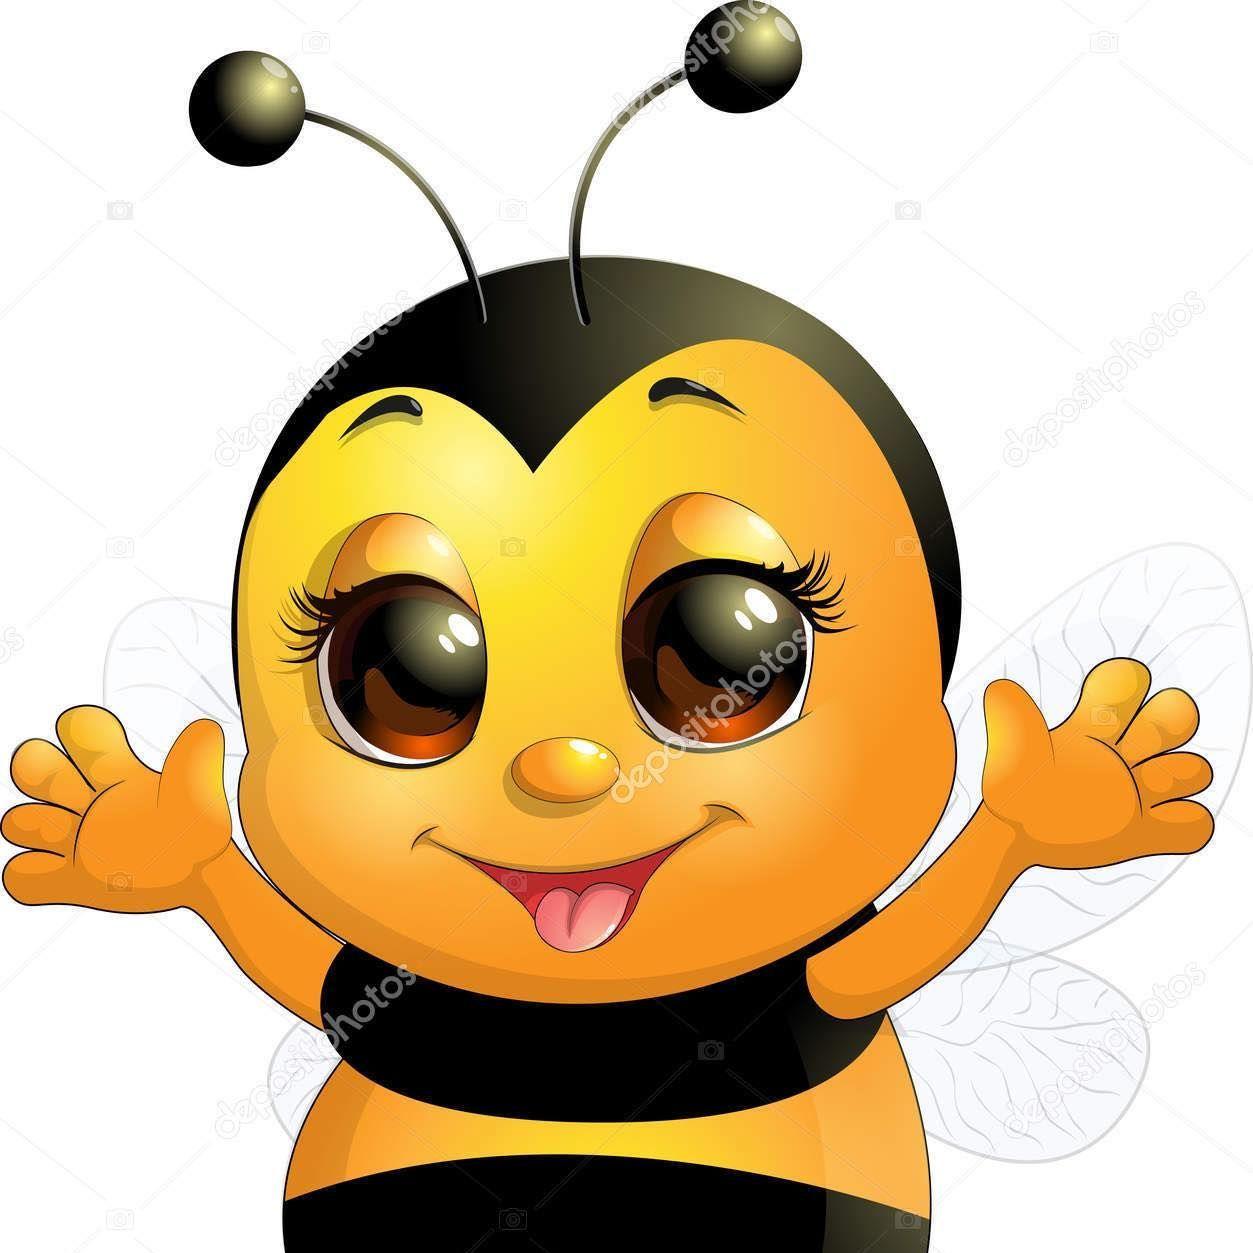 Player Bee132 avatar